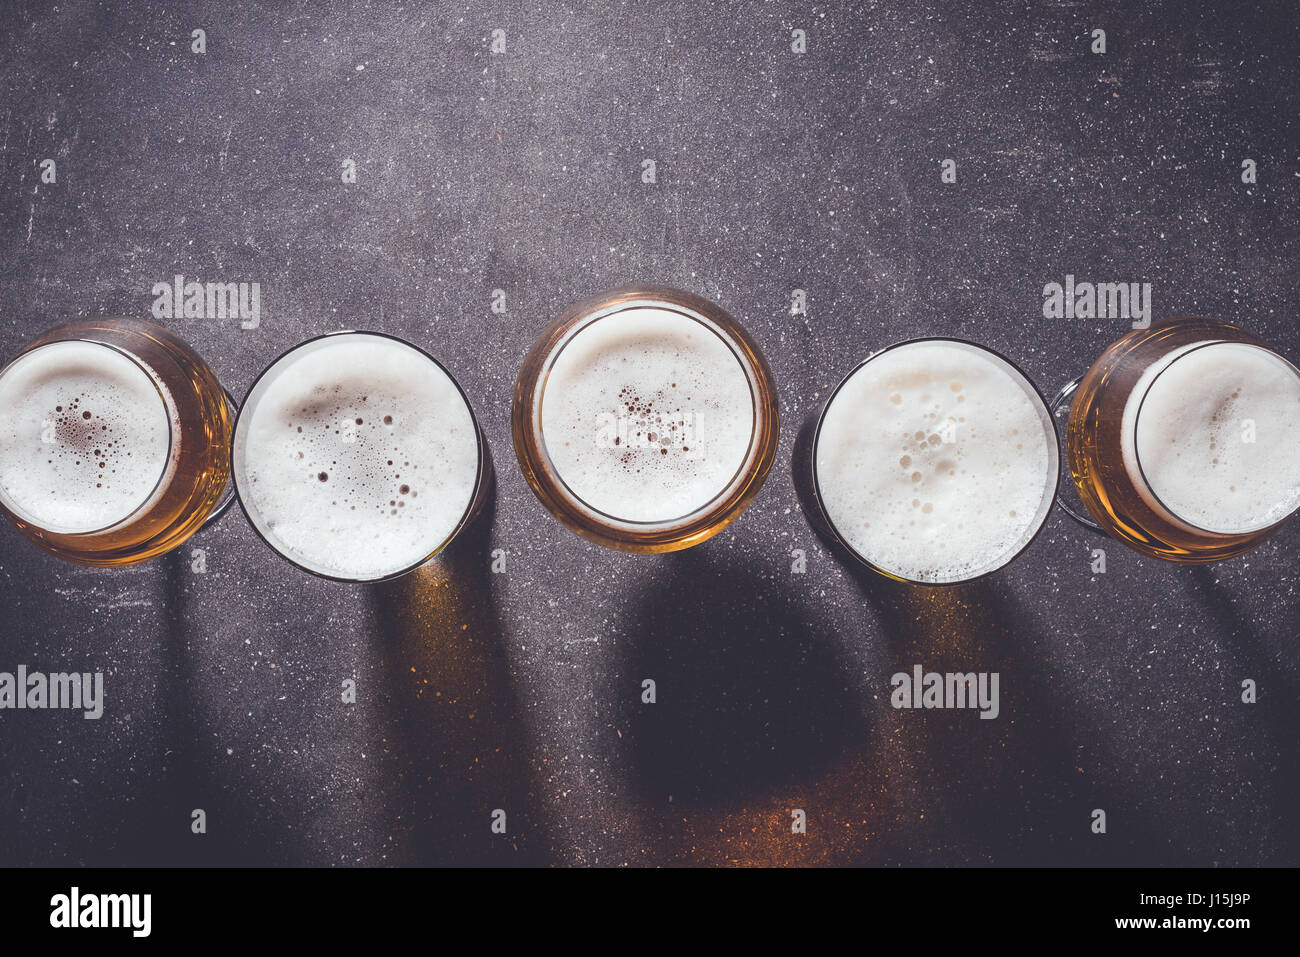 Beer glasses on dark table Stock Photo